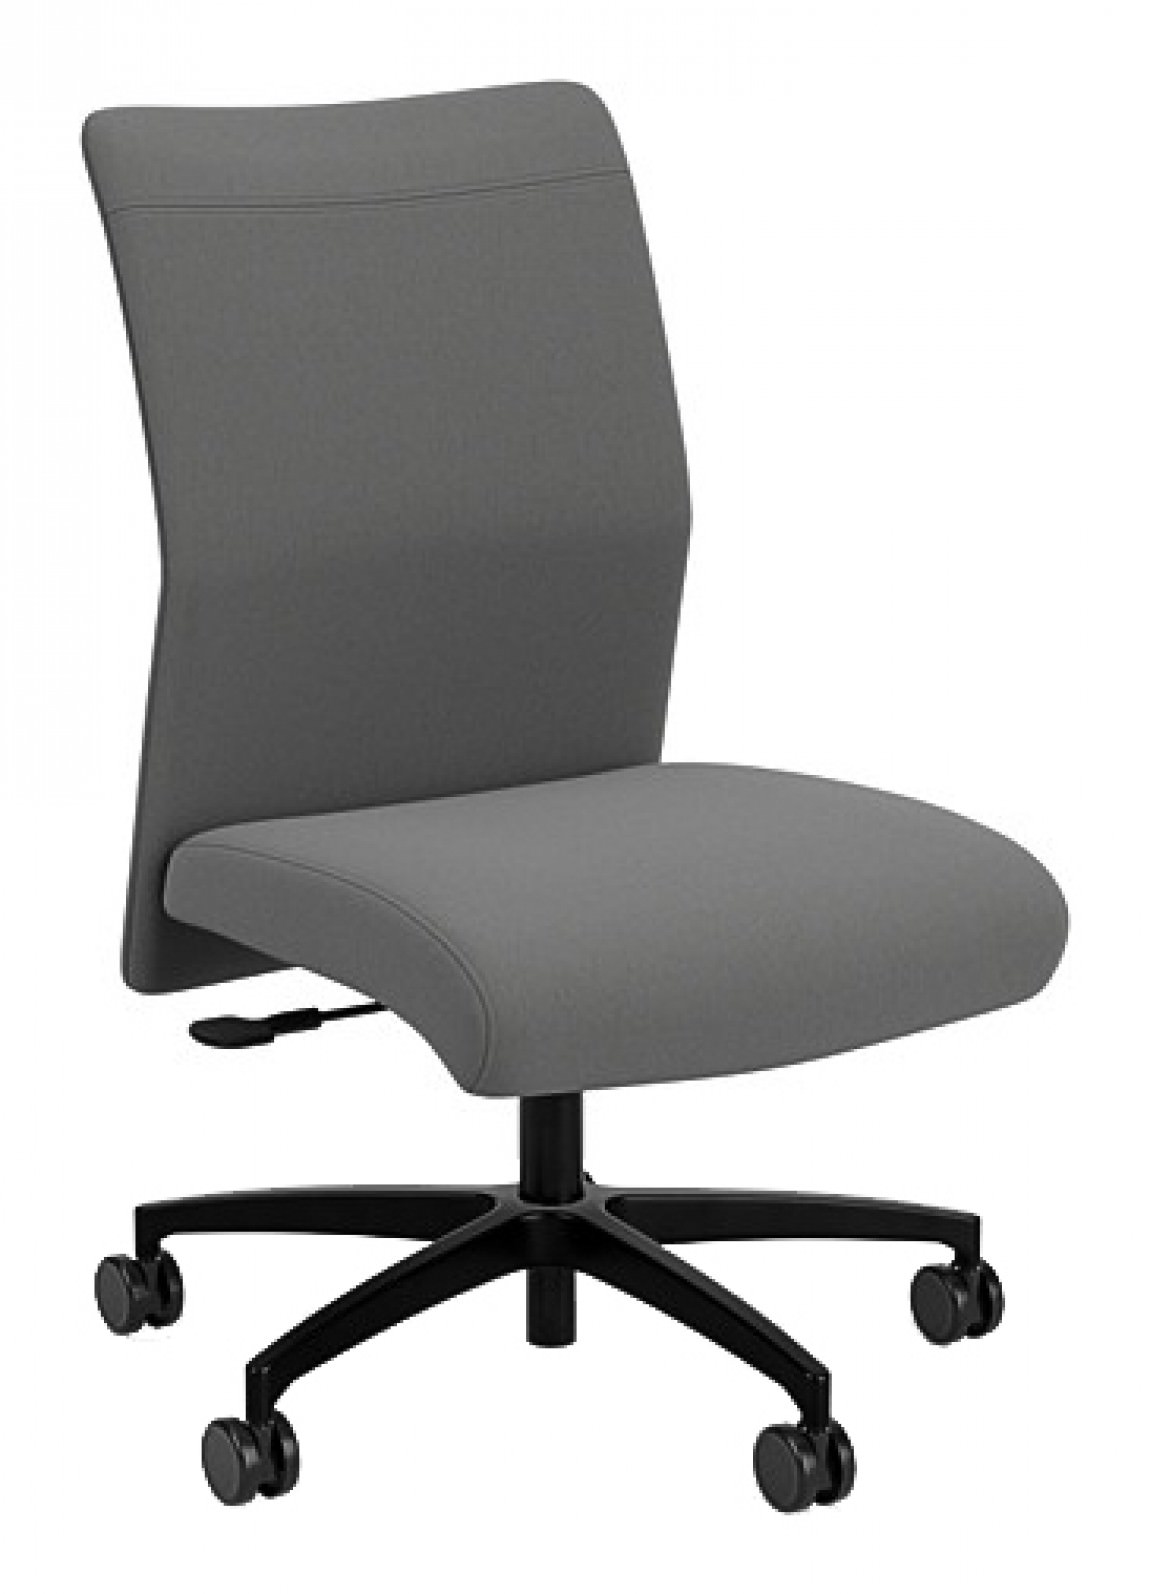 https://madisonliquidators.com/images/p/1150/28847-armless-adjustable-office-chair-1.jpg